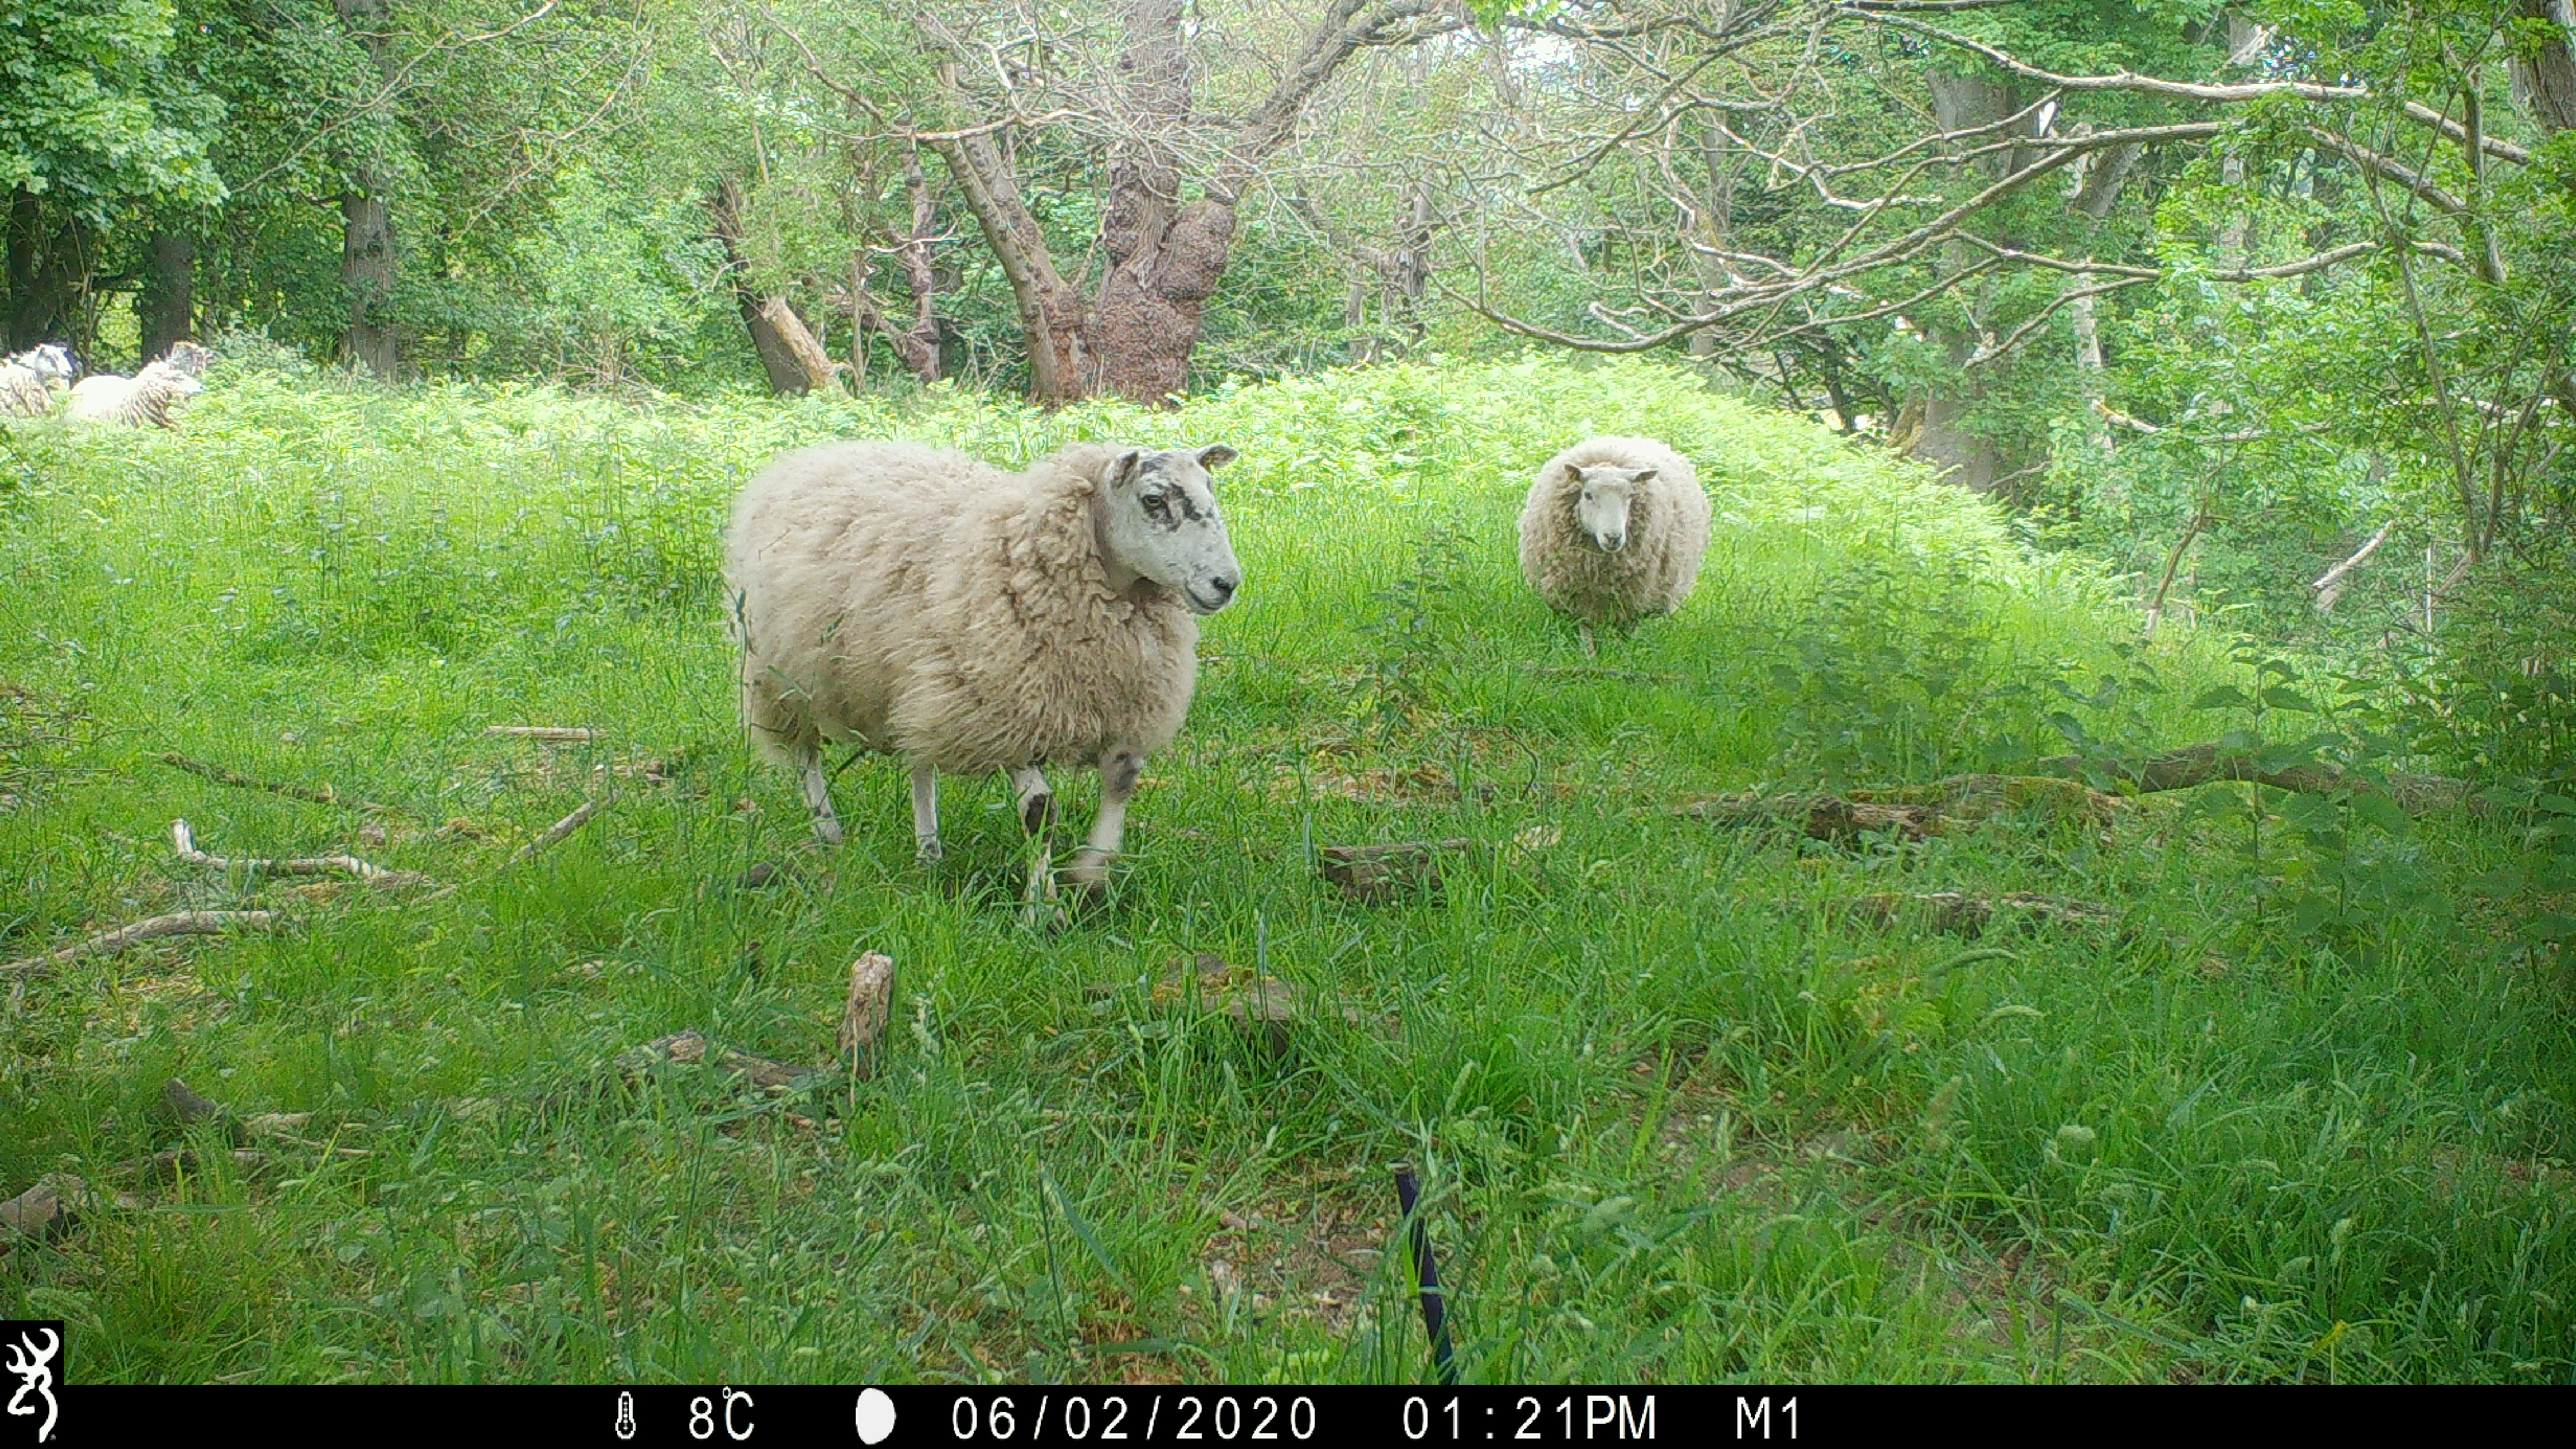 Sheep grazing caught on camera trap